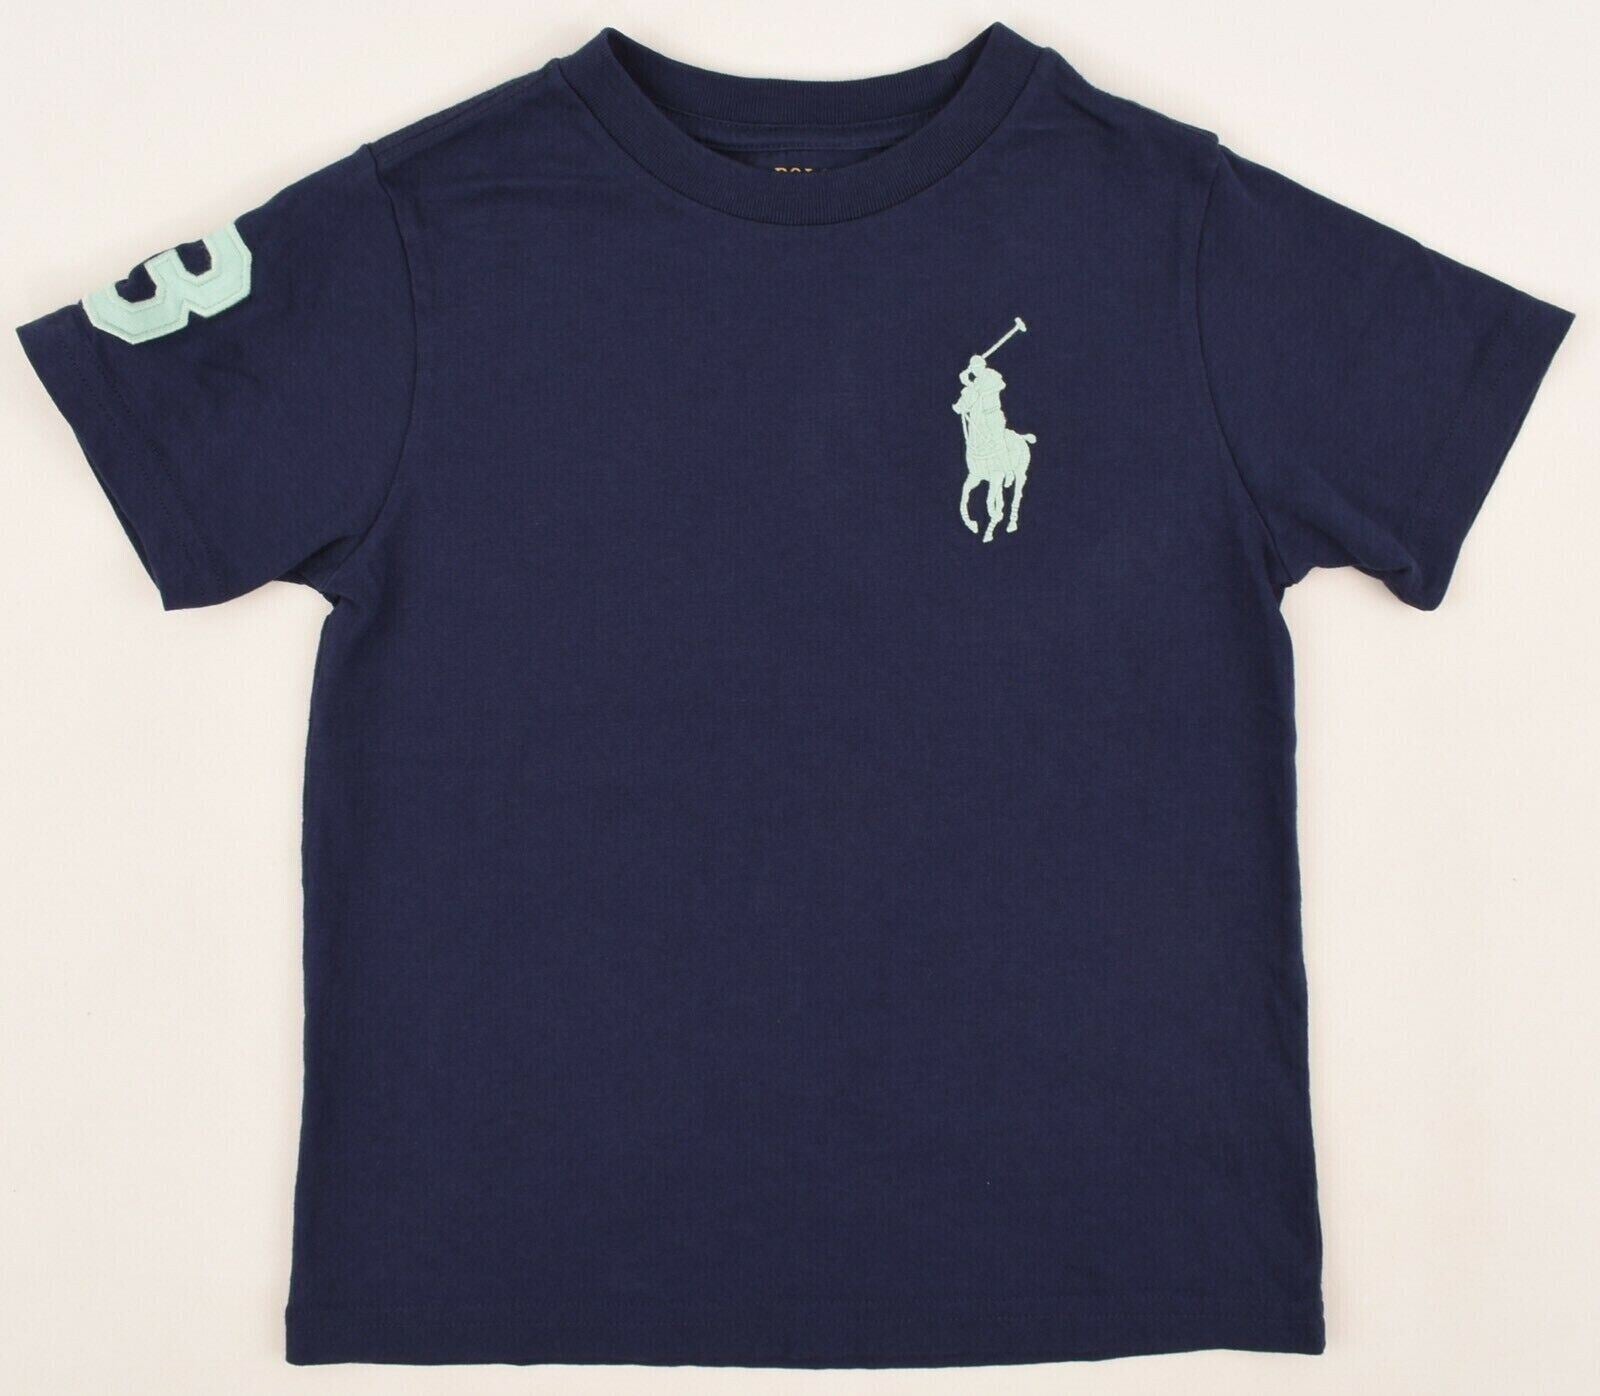 POLO RALPH LAUREN Boys' Kids' BIG PONY T-shirt, Navy Blue, size 4 Years